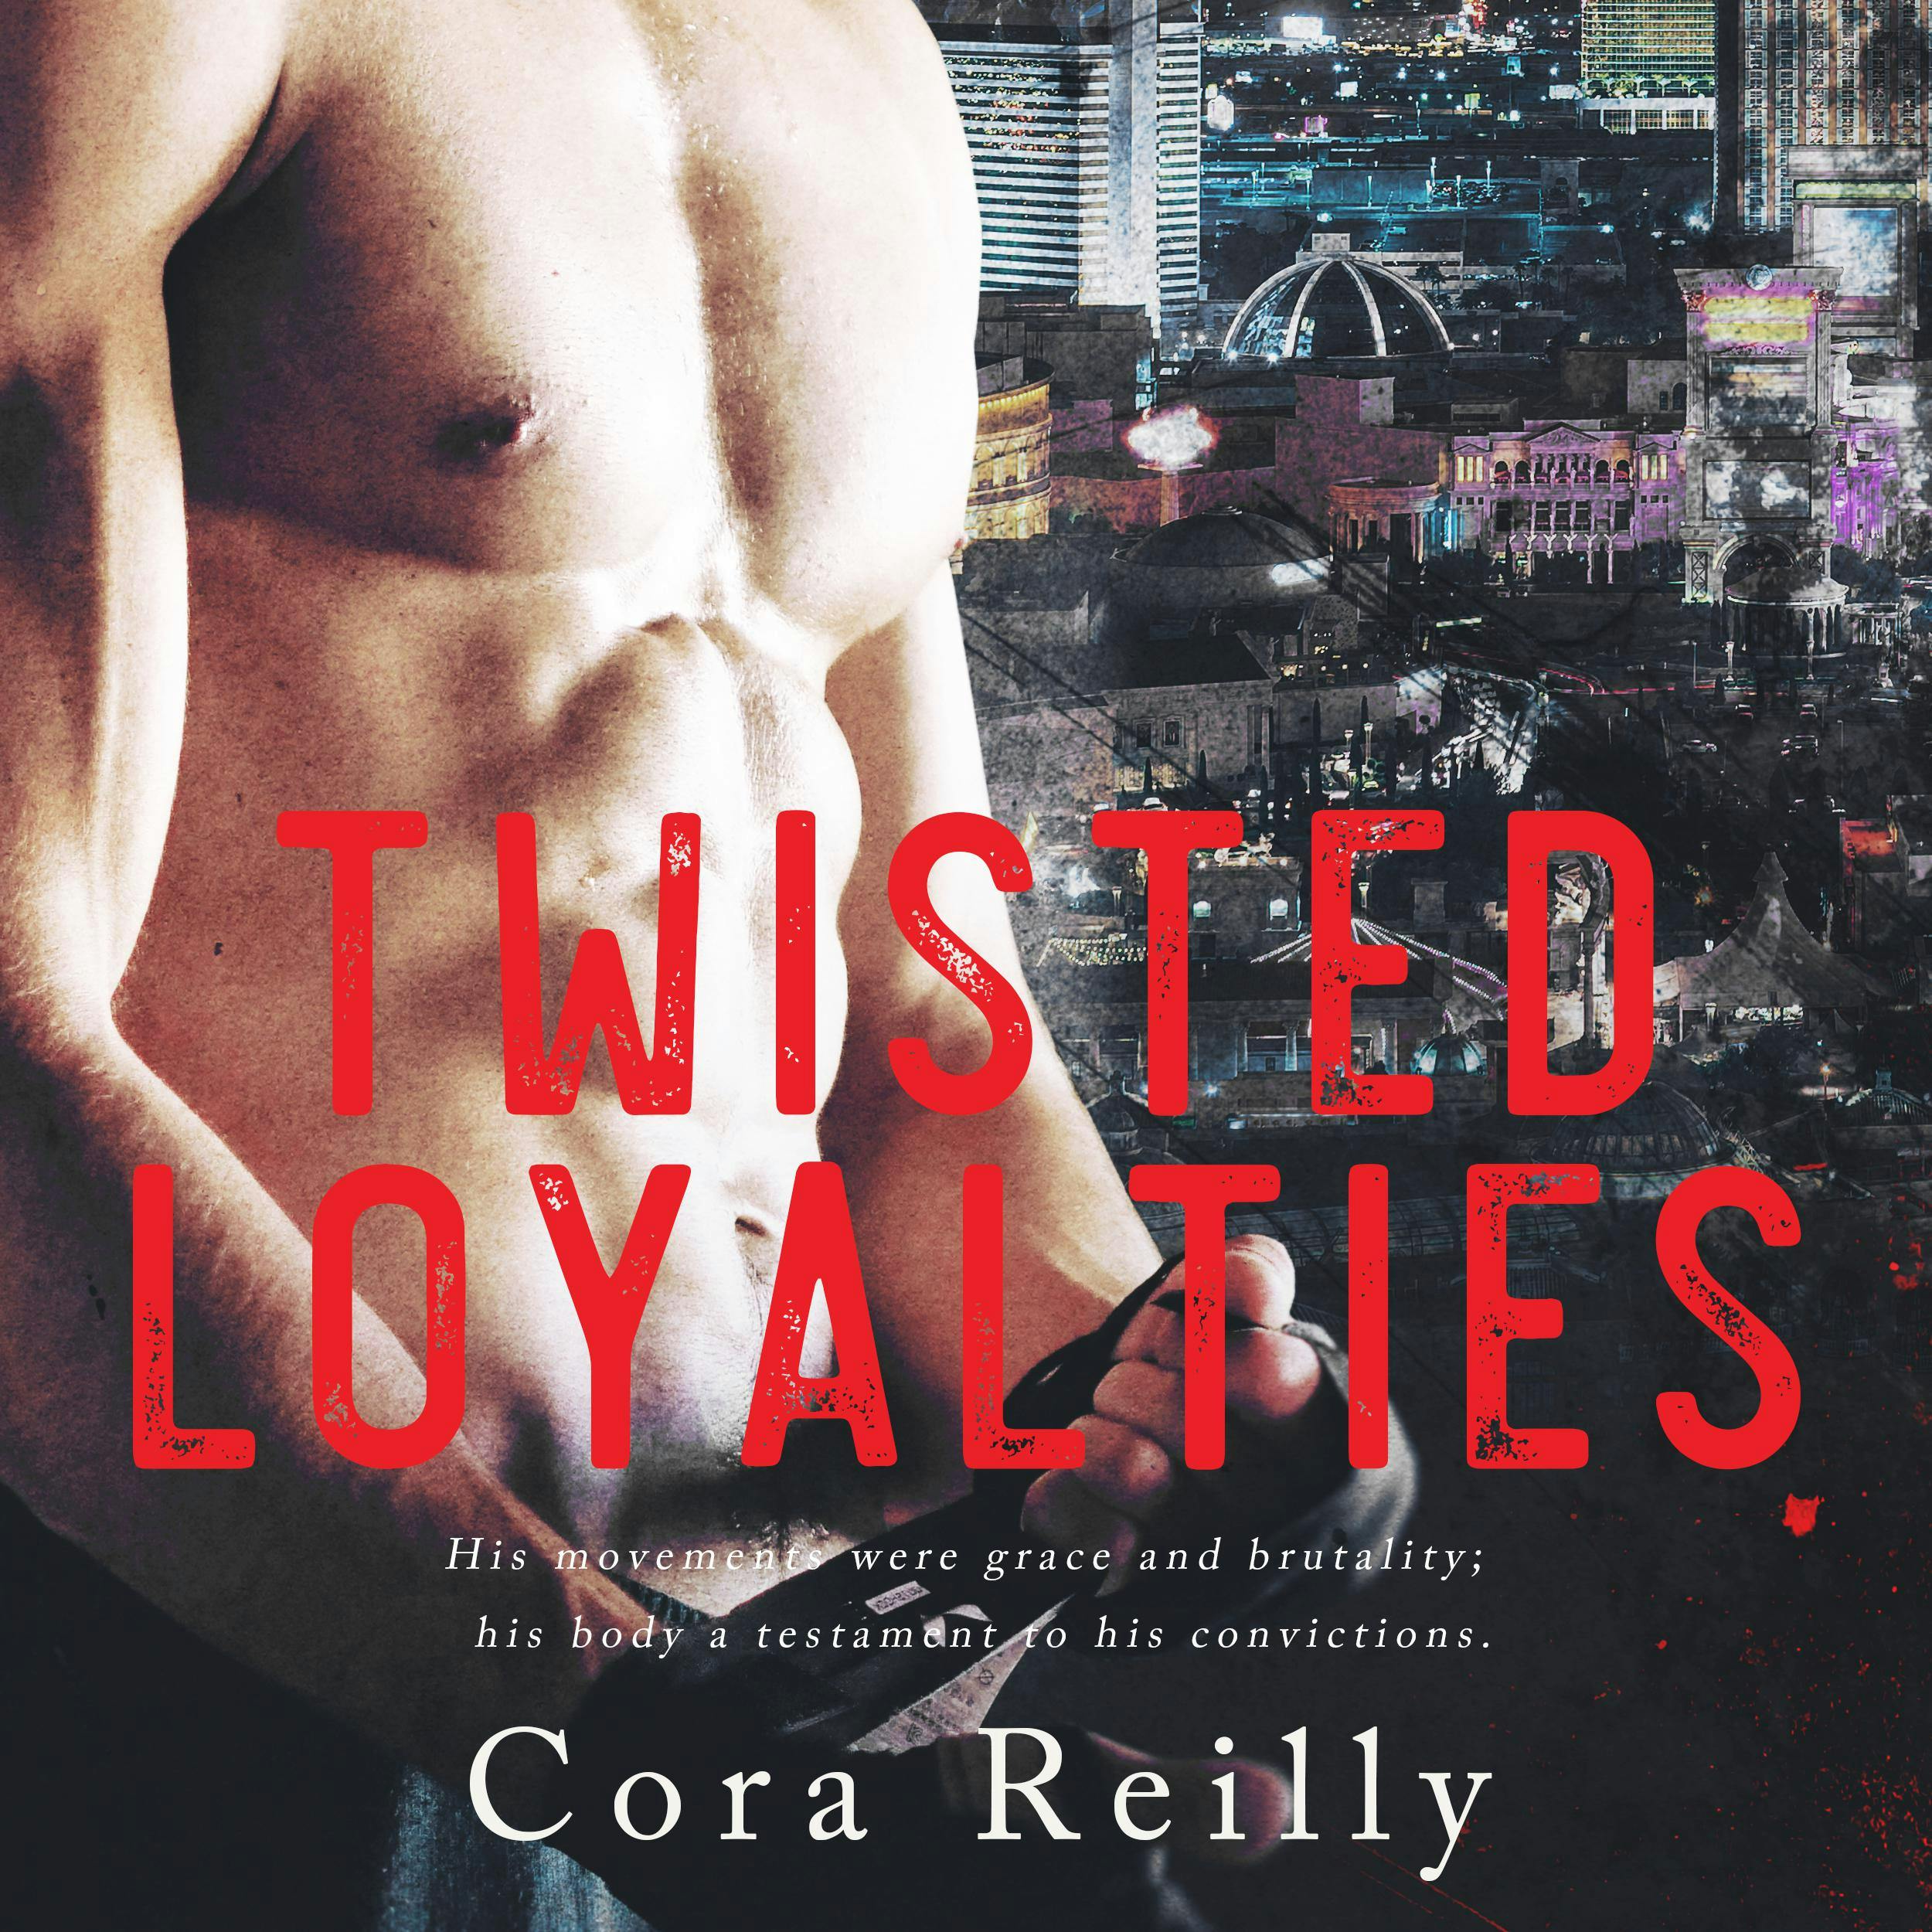 Twisted Loyalties - Cora Reilly